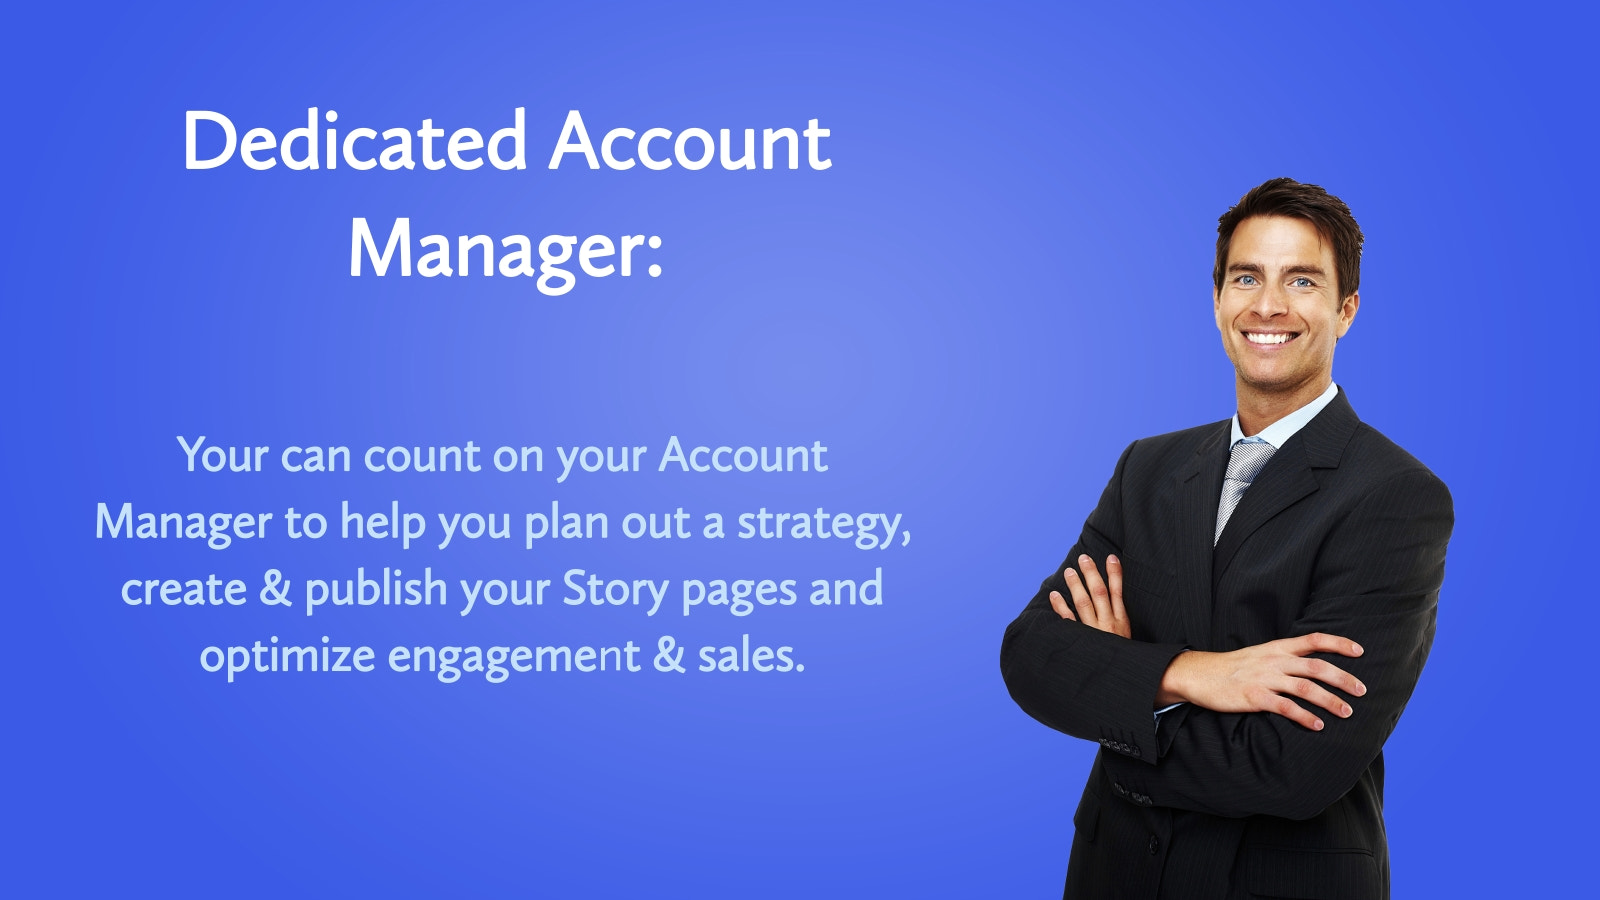 Dedizierter Account Manager